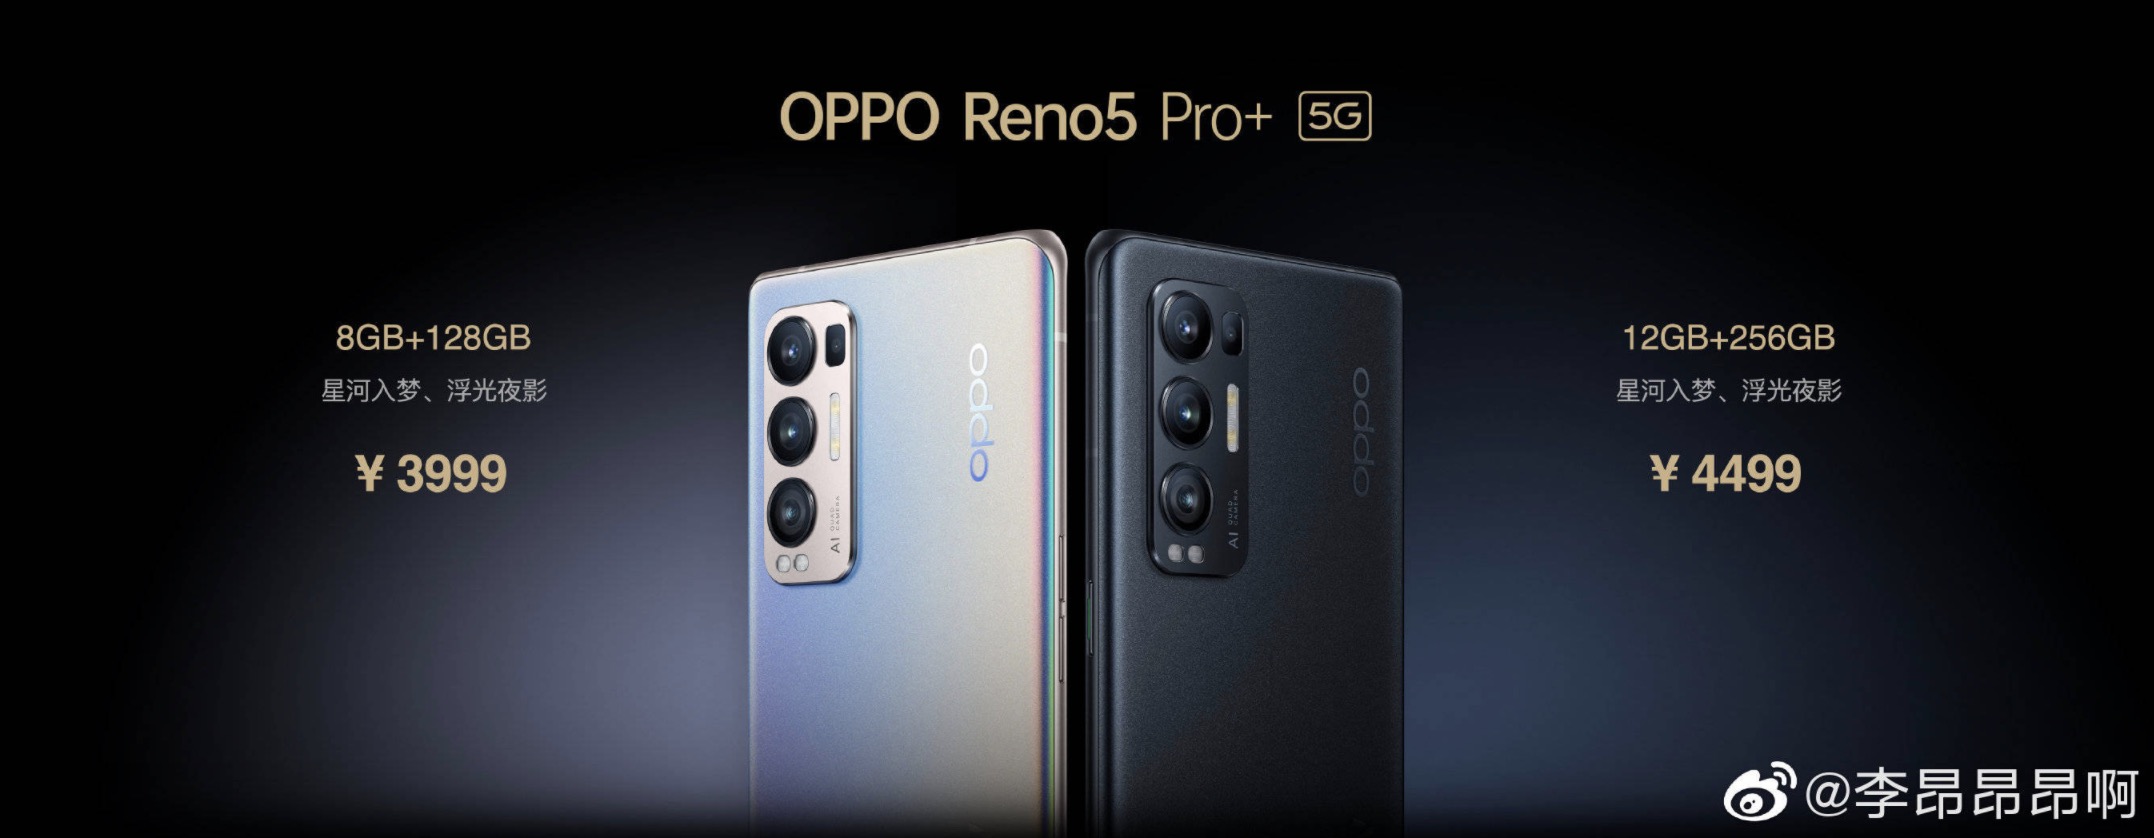 oppo-reno5-pro-ra-mat-4